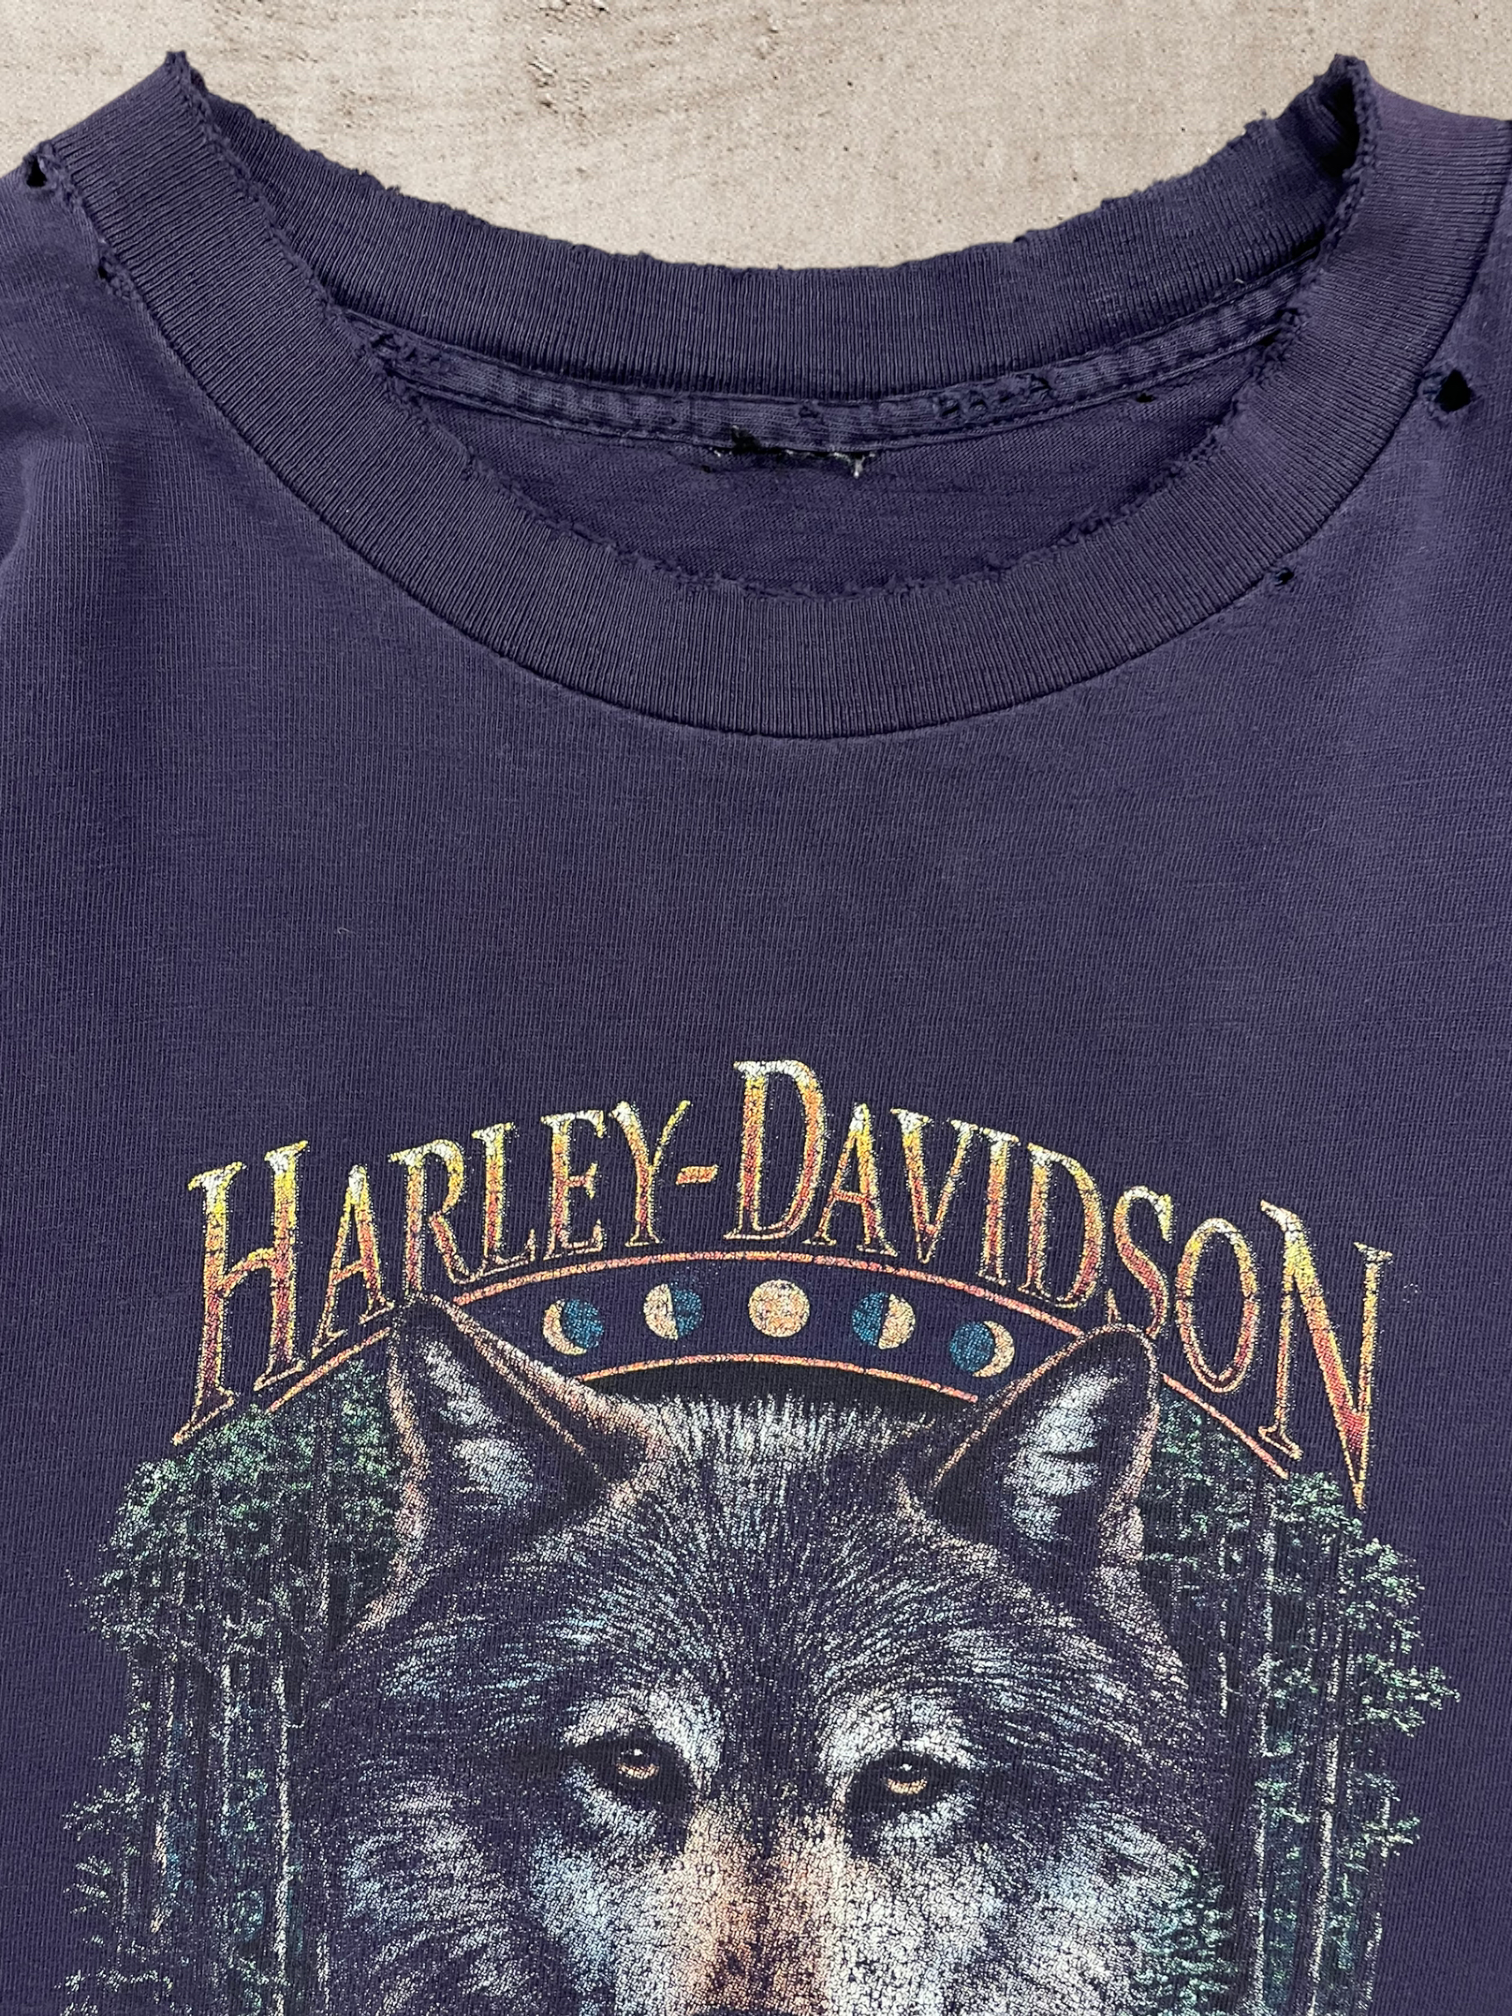 90s Harley Davidson Distressed T-Shirt - XL